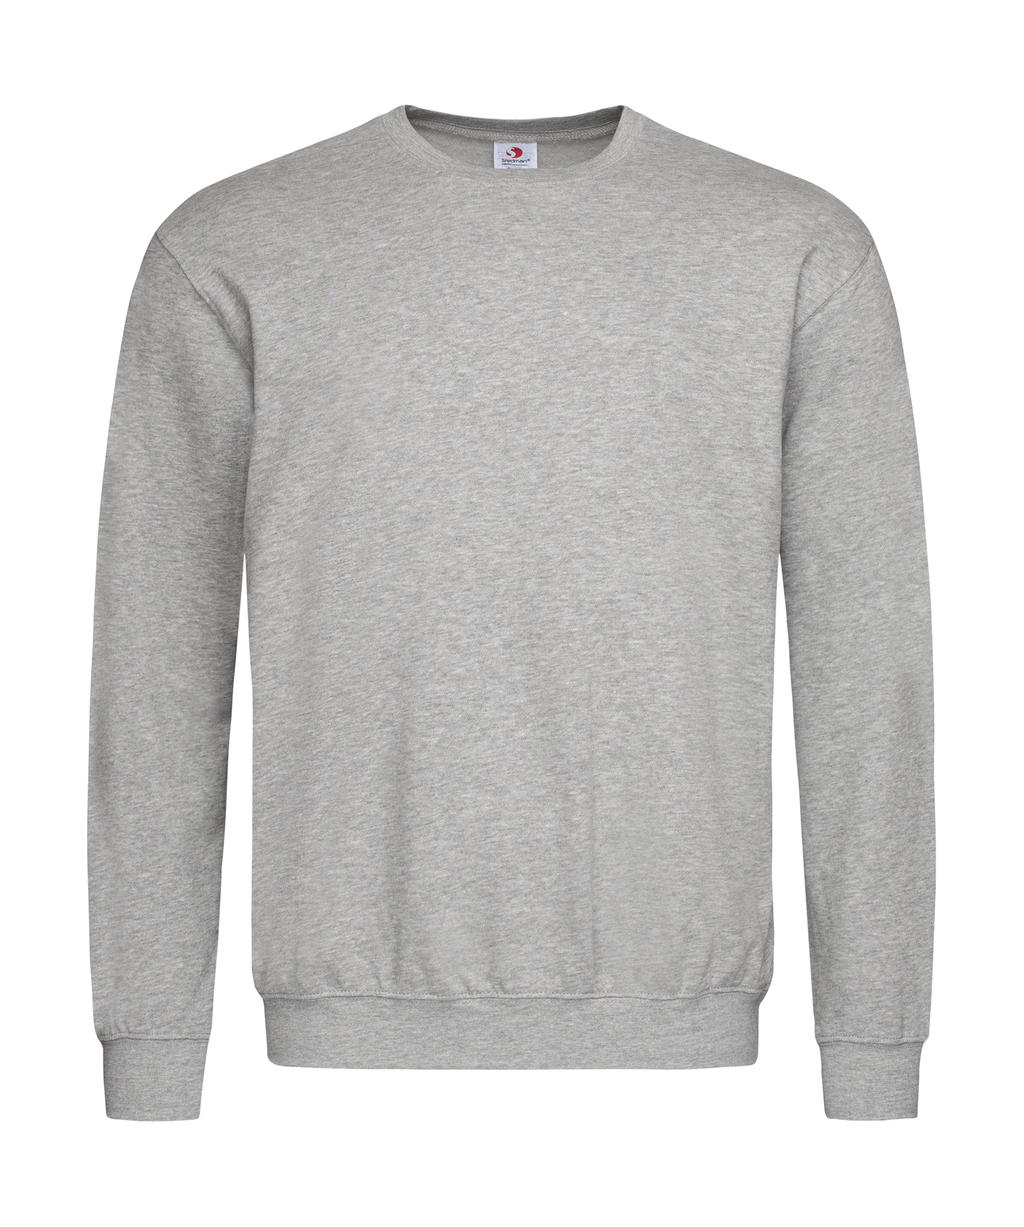  Unisex Sweatshirt Classic in Farbe Grey Heather